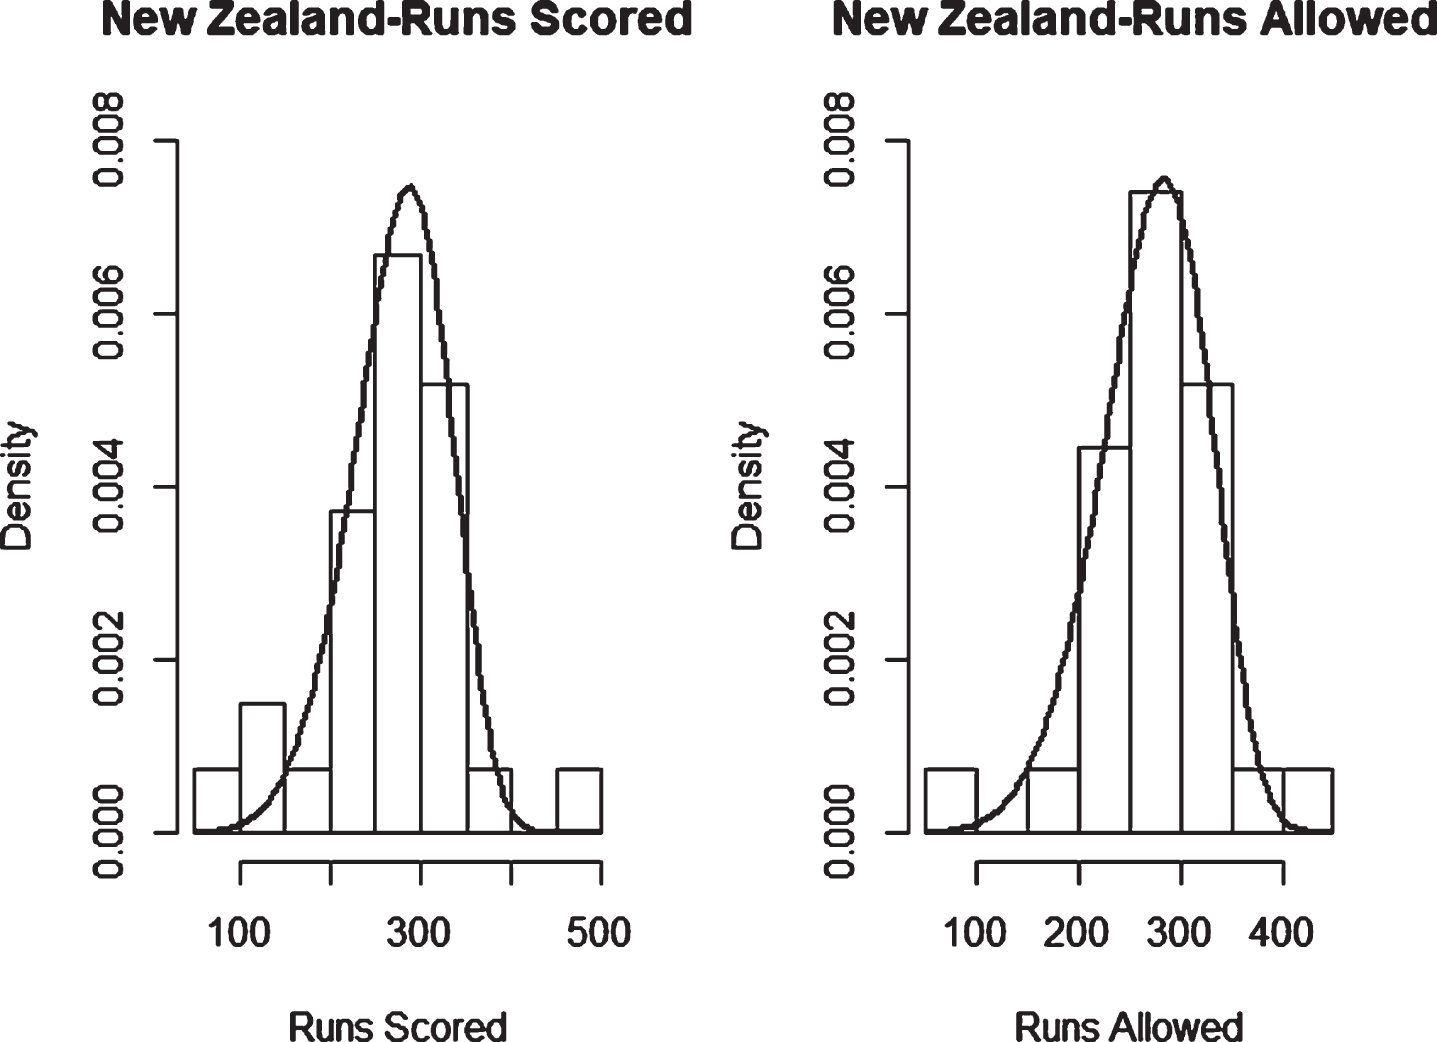 Weibull Distribution Fit for Runs Scored and Runs Allowed for New Zealand using Maximum Likelihood Method (ODI).